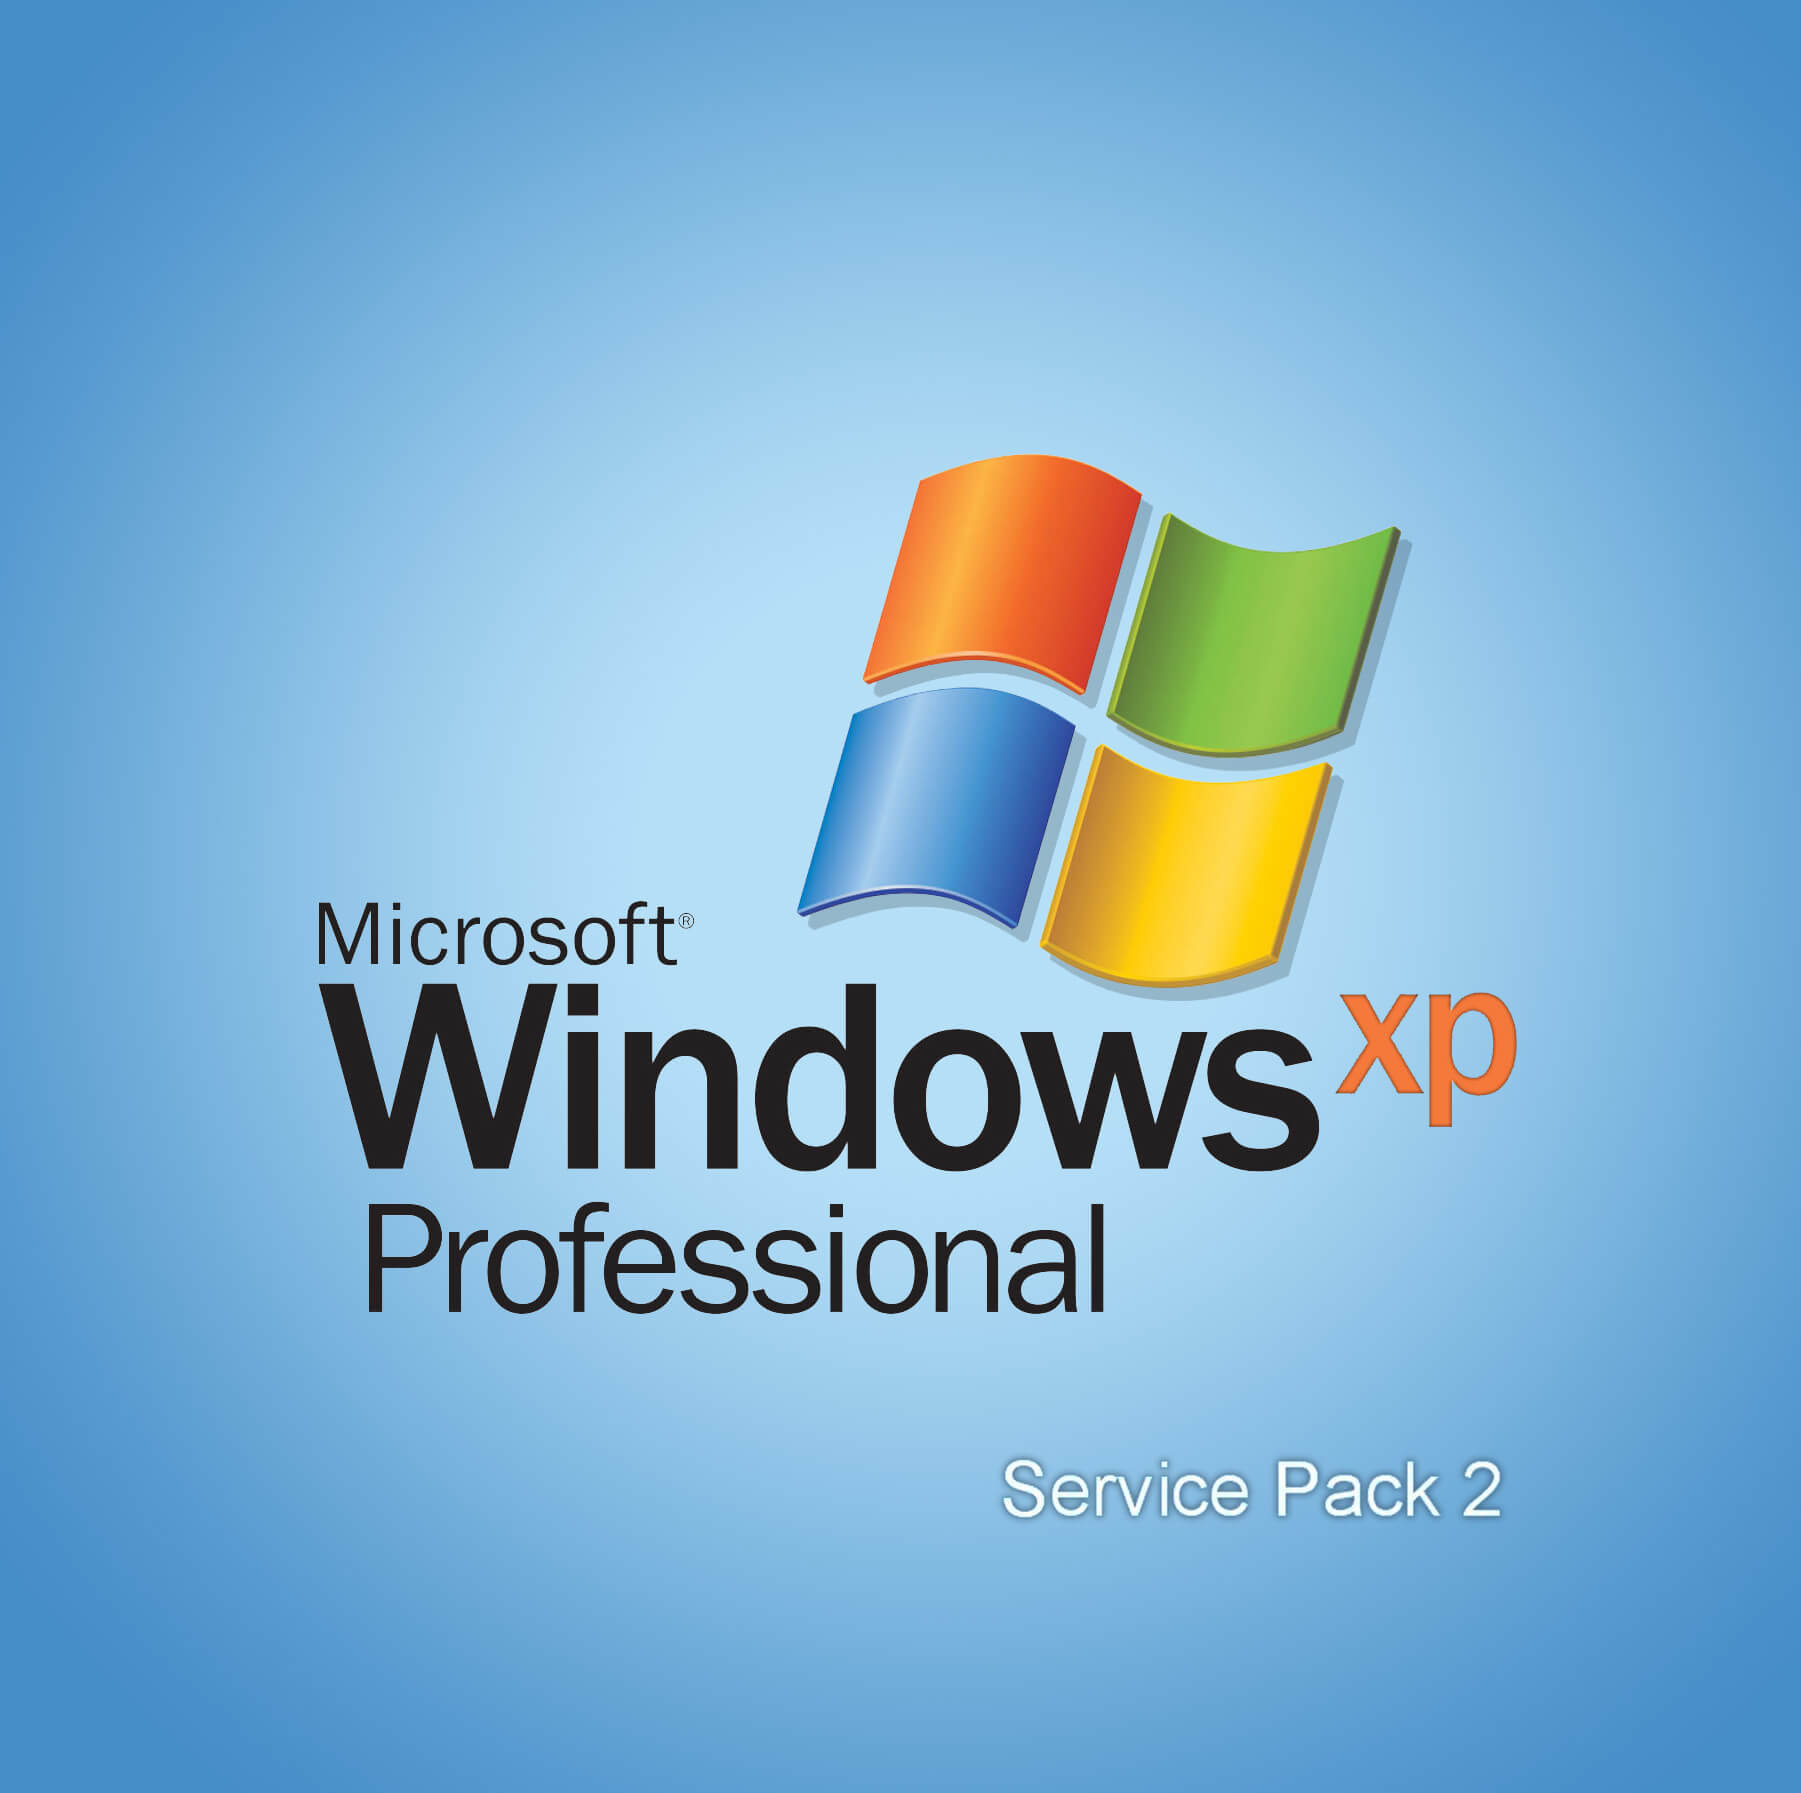 служба Windows XP запихнула антивирусное программное обеспечение 2